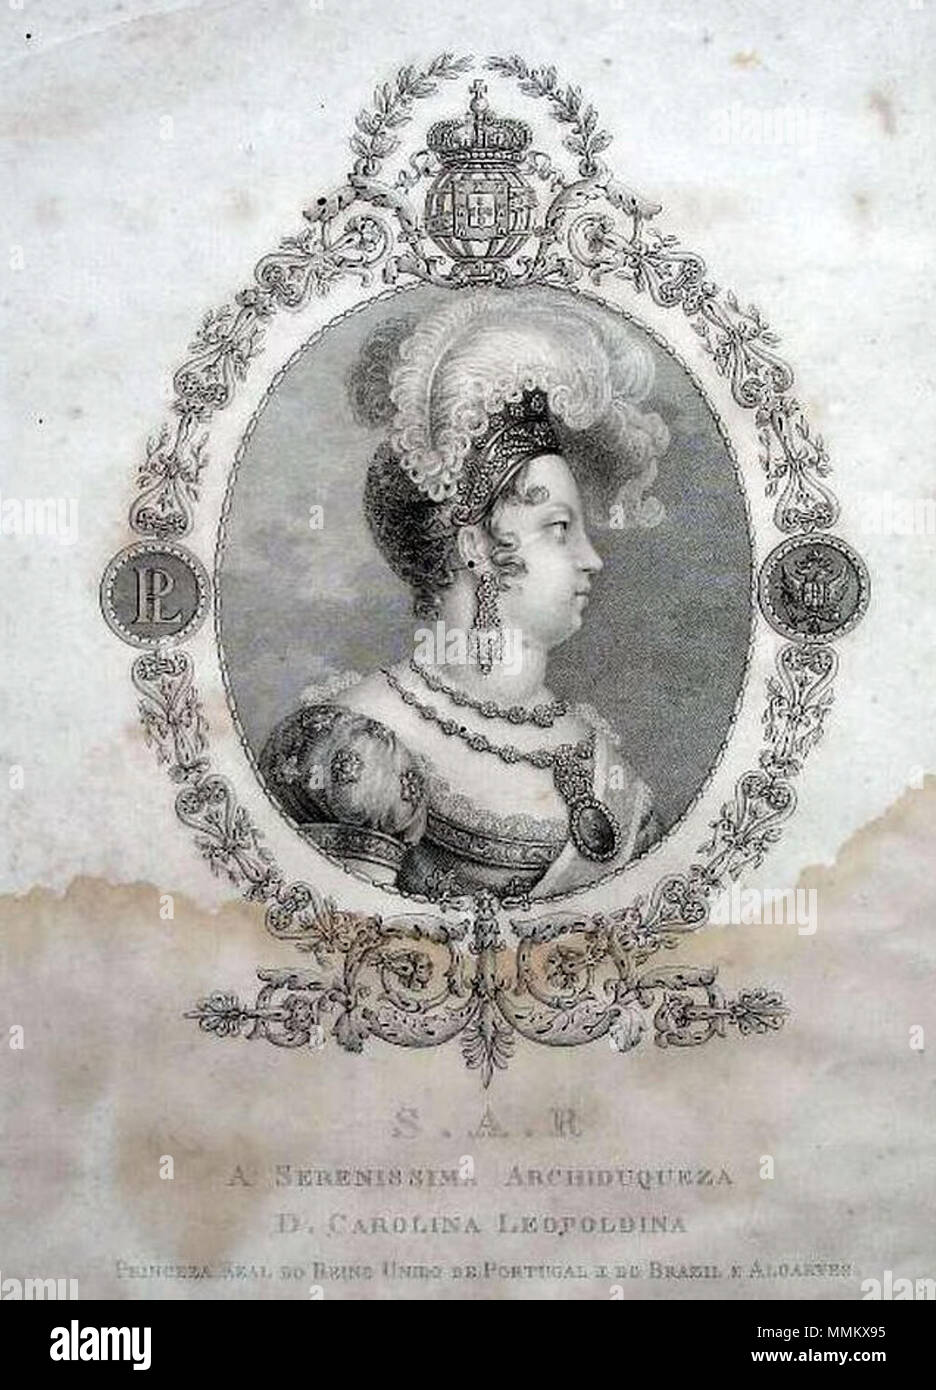 S.A.R. Eine Sereníssima Archiduquesa D. Carolina Leopoldina Princesa Real do Reino de Portugal e do Brasilien e Algarves Stockfoto